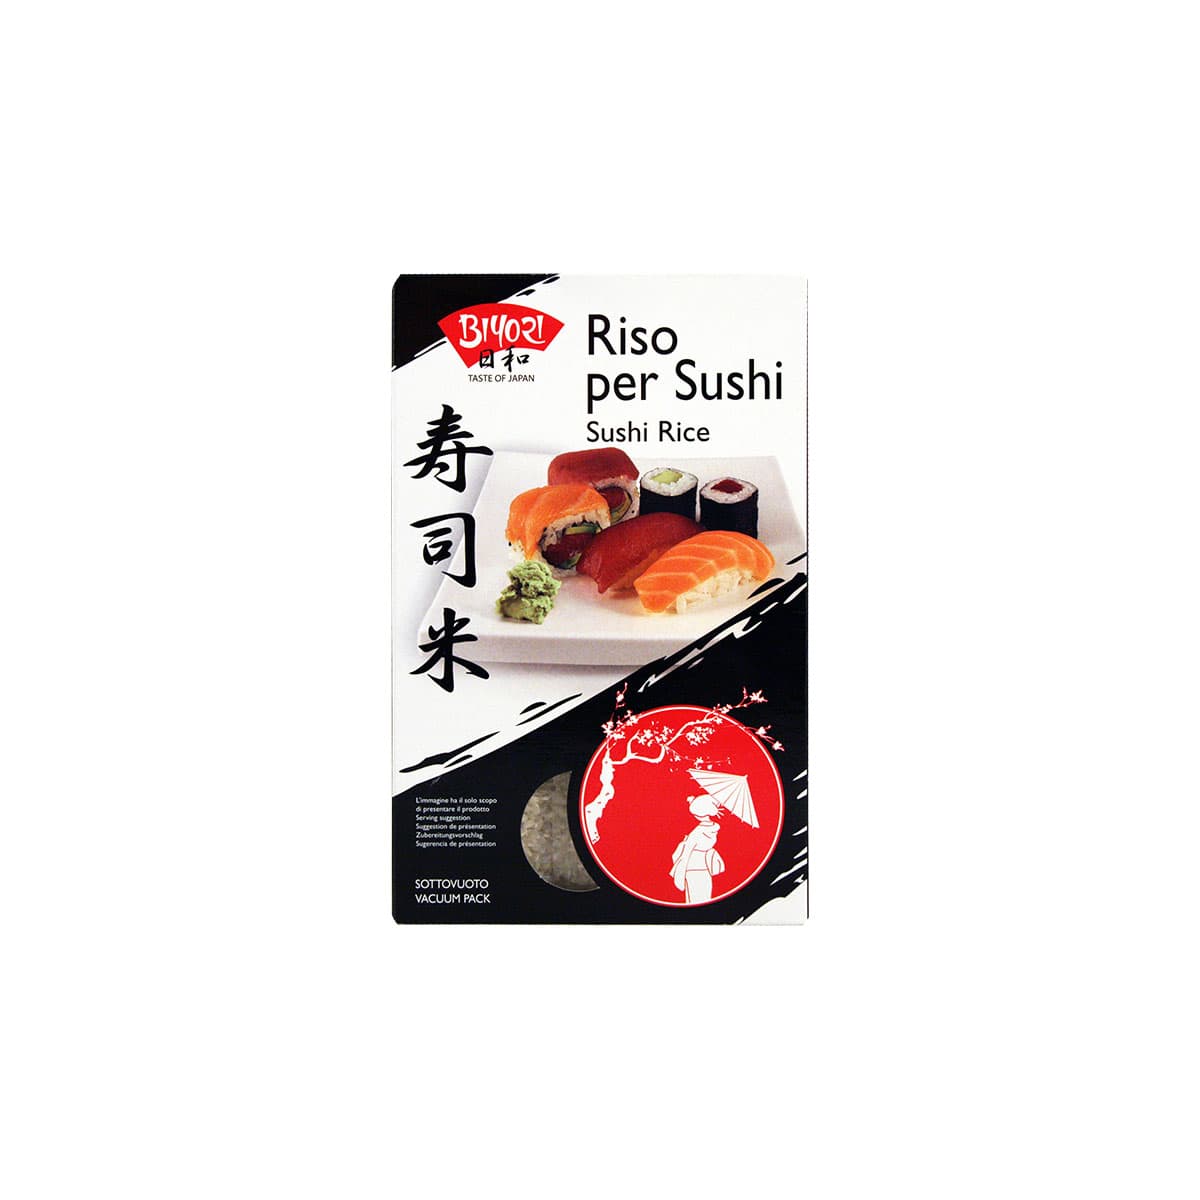 Riso per sushi, 1kg